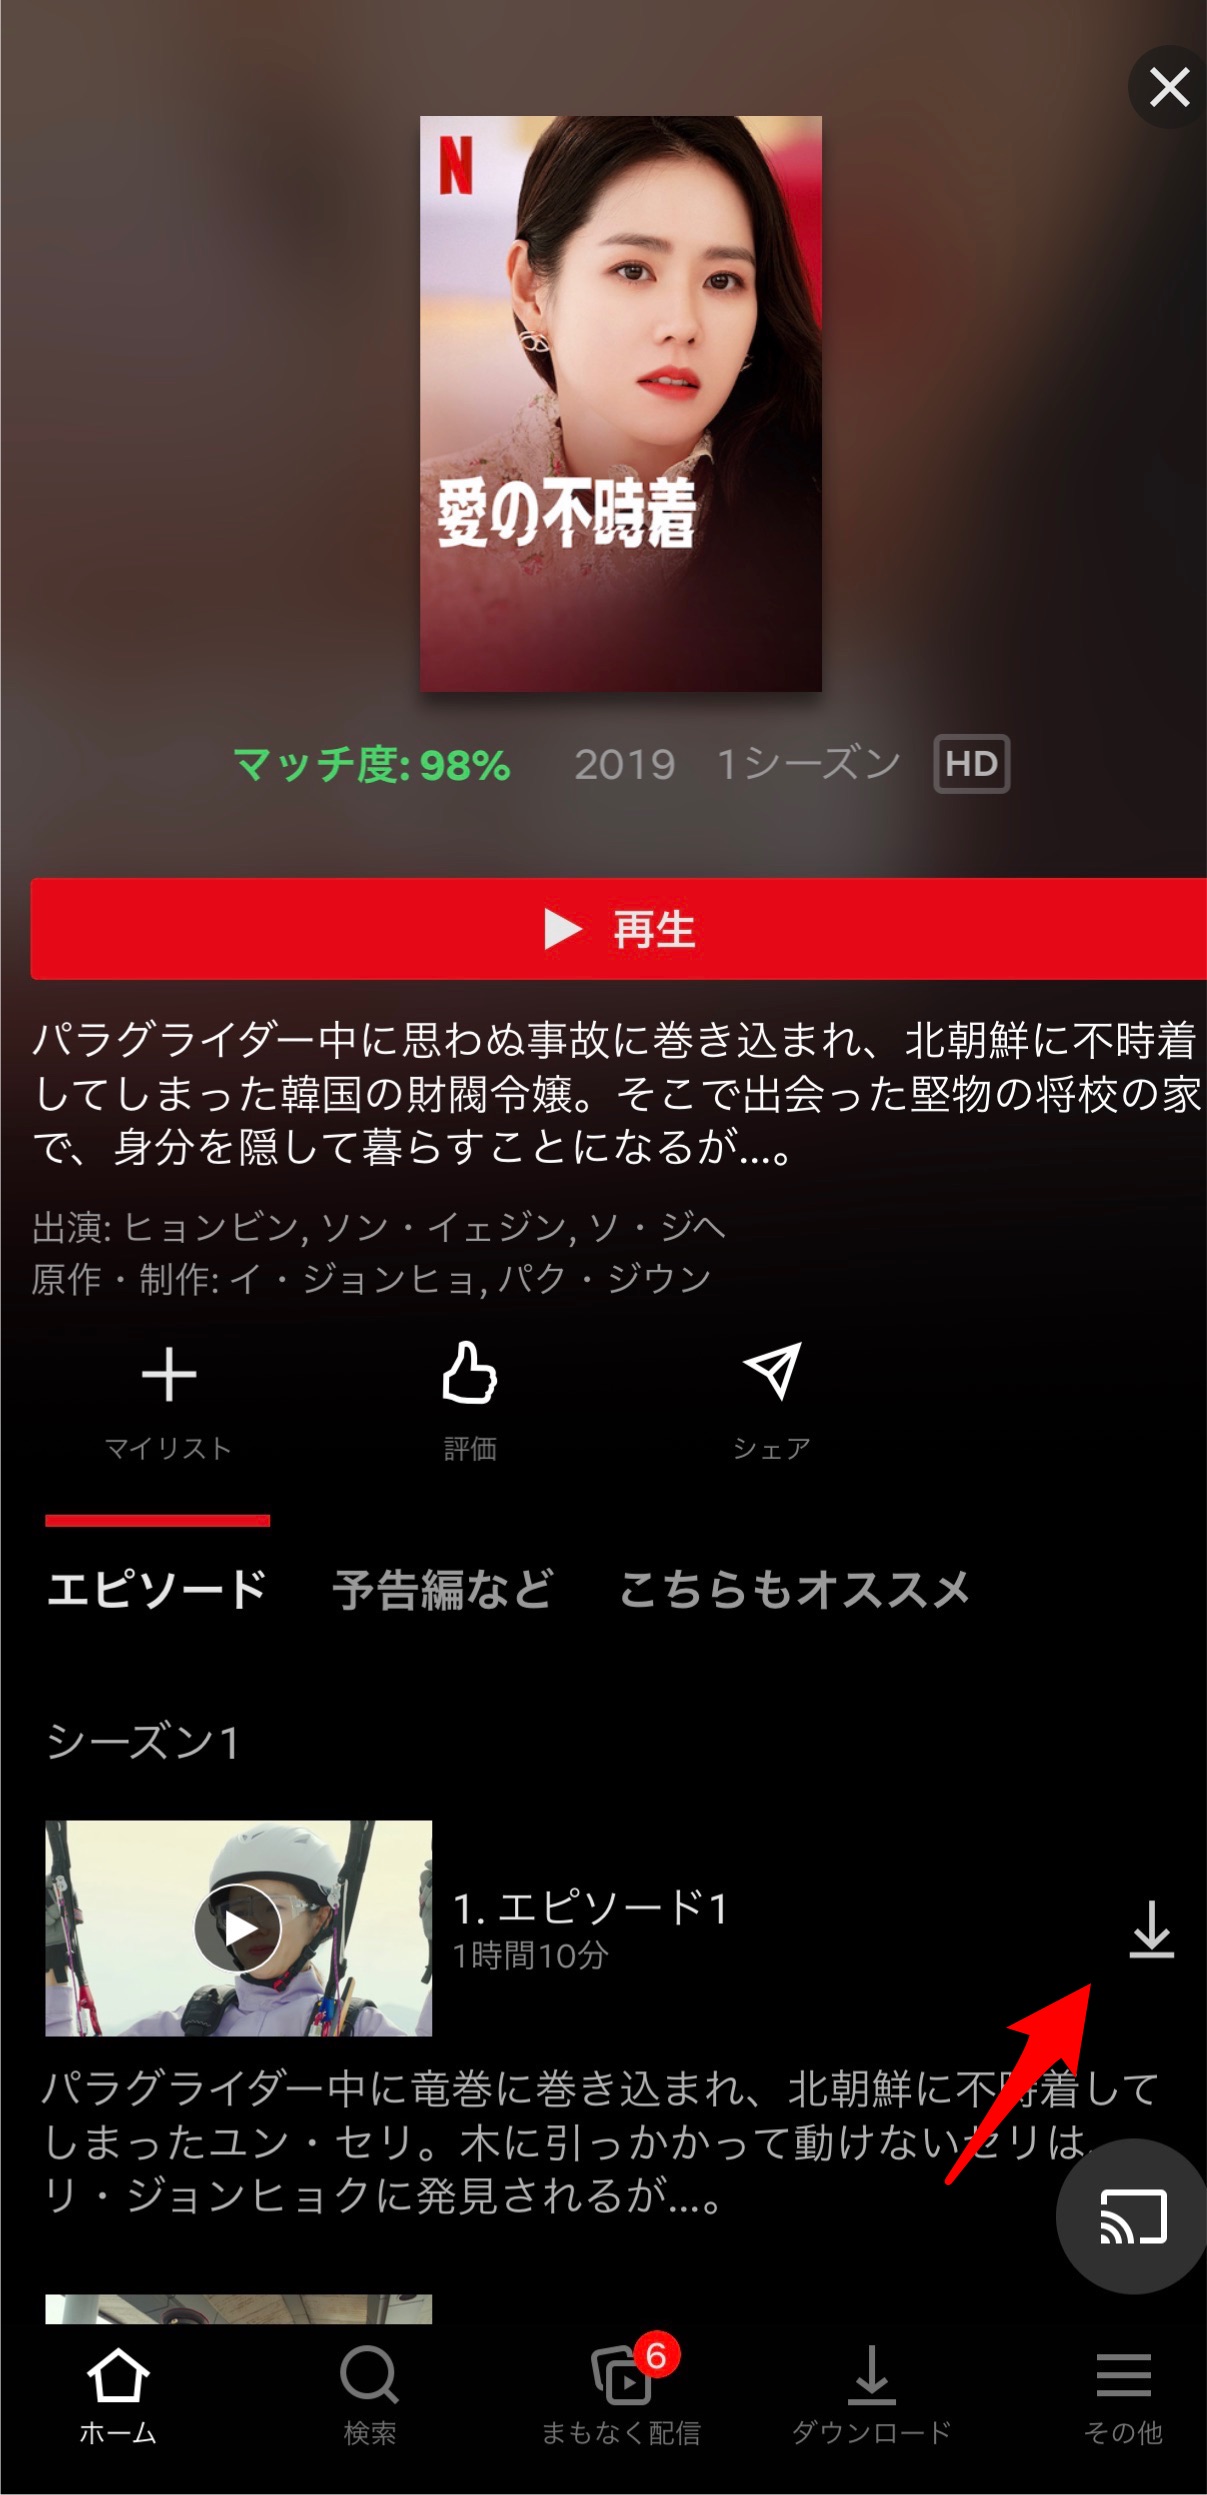 Netflixダウンロードボタン紹介画面